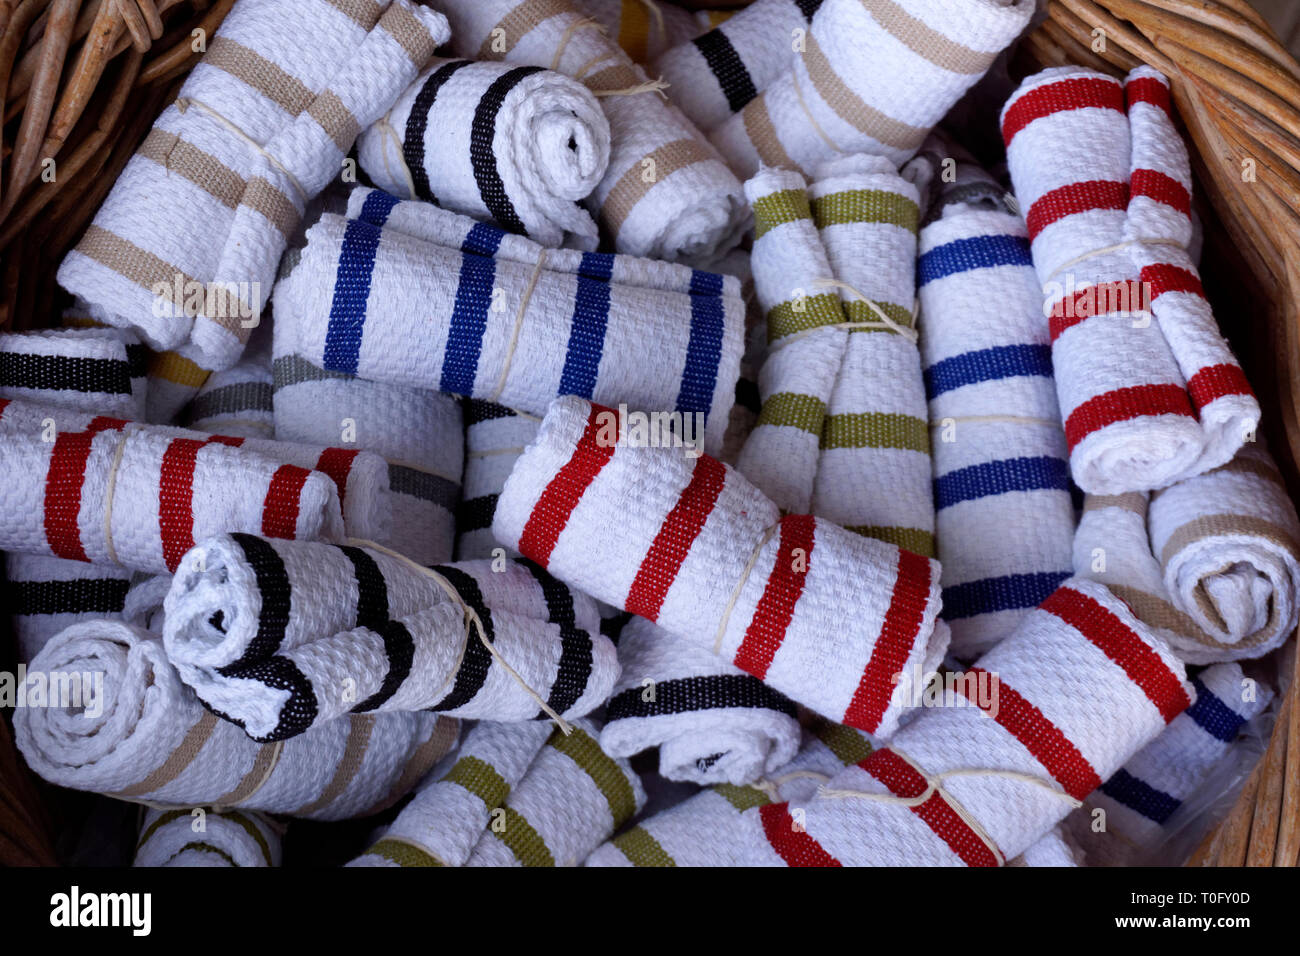 https://c8.alamy.com/comp/T0FY0D/rolled-striped-tea-towels-or-dishtowels-in-a-basket-T0FY0D.jpg